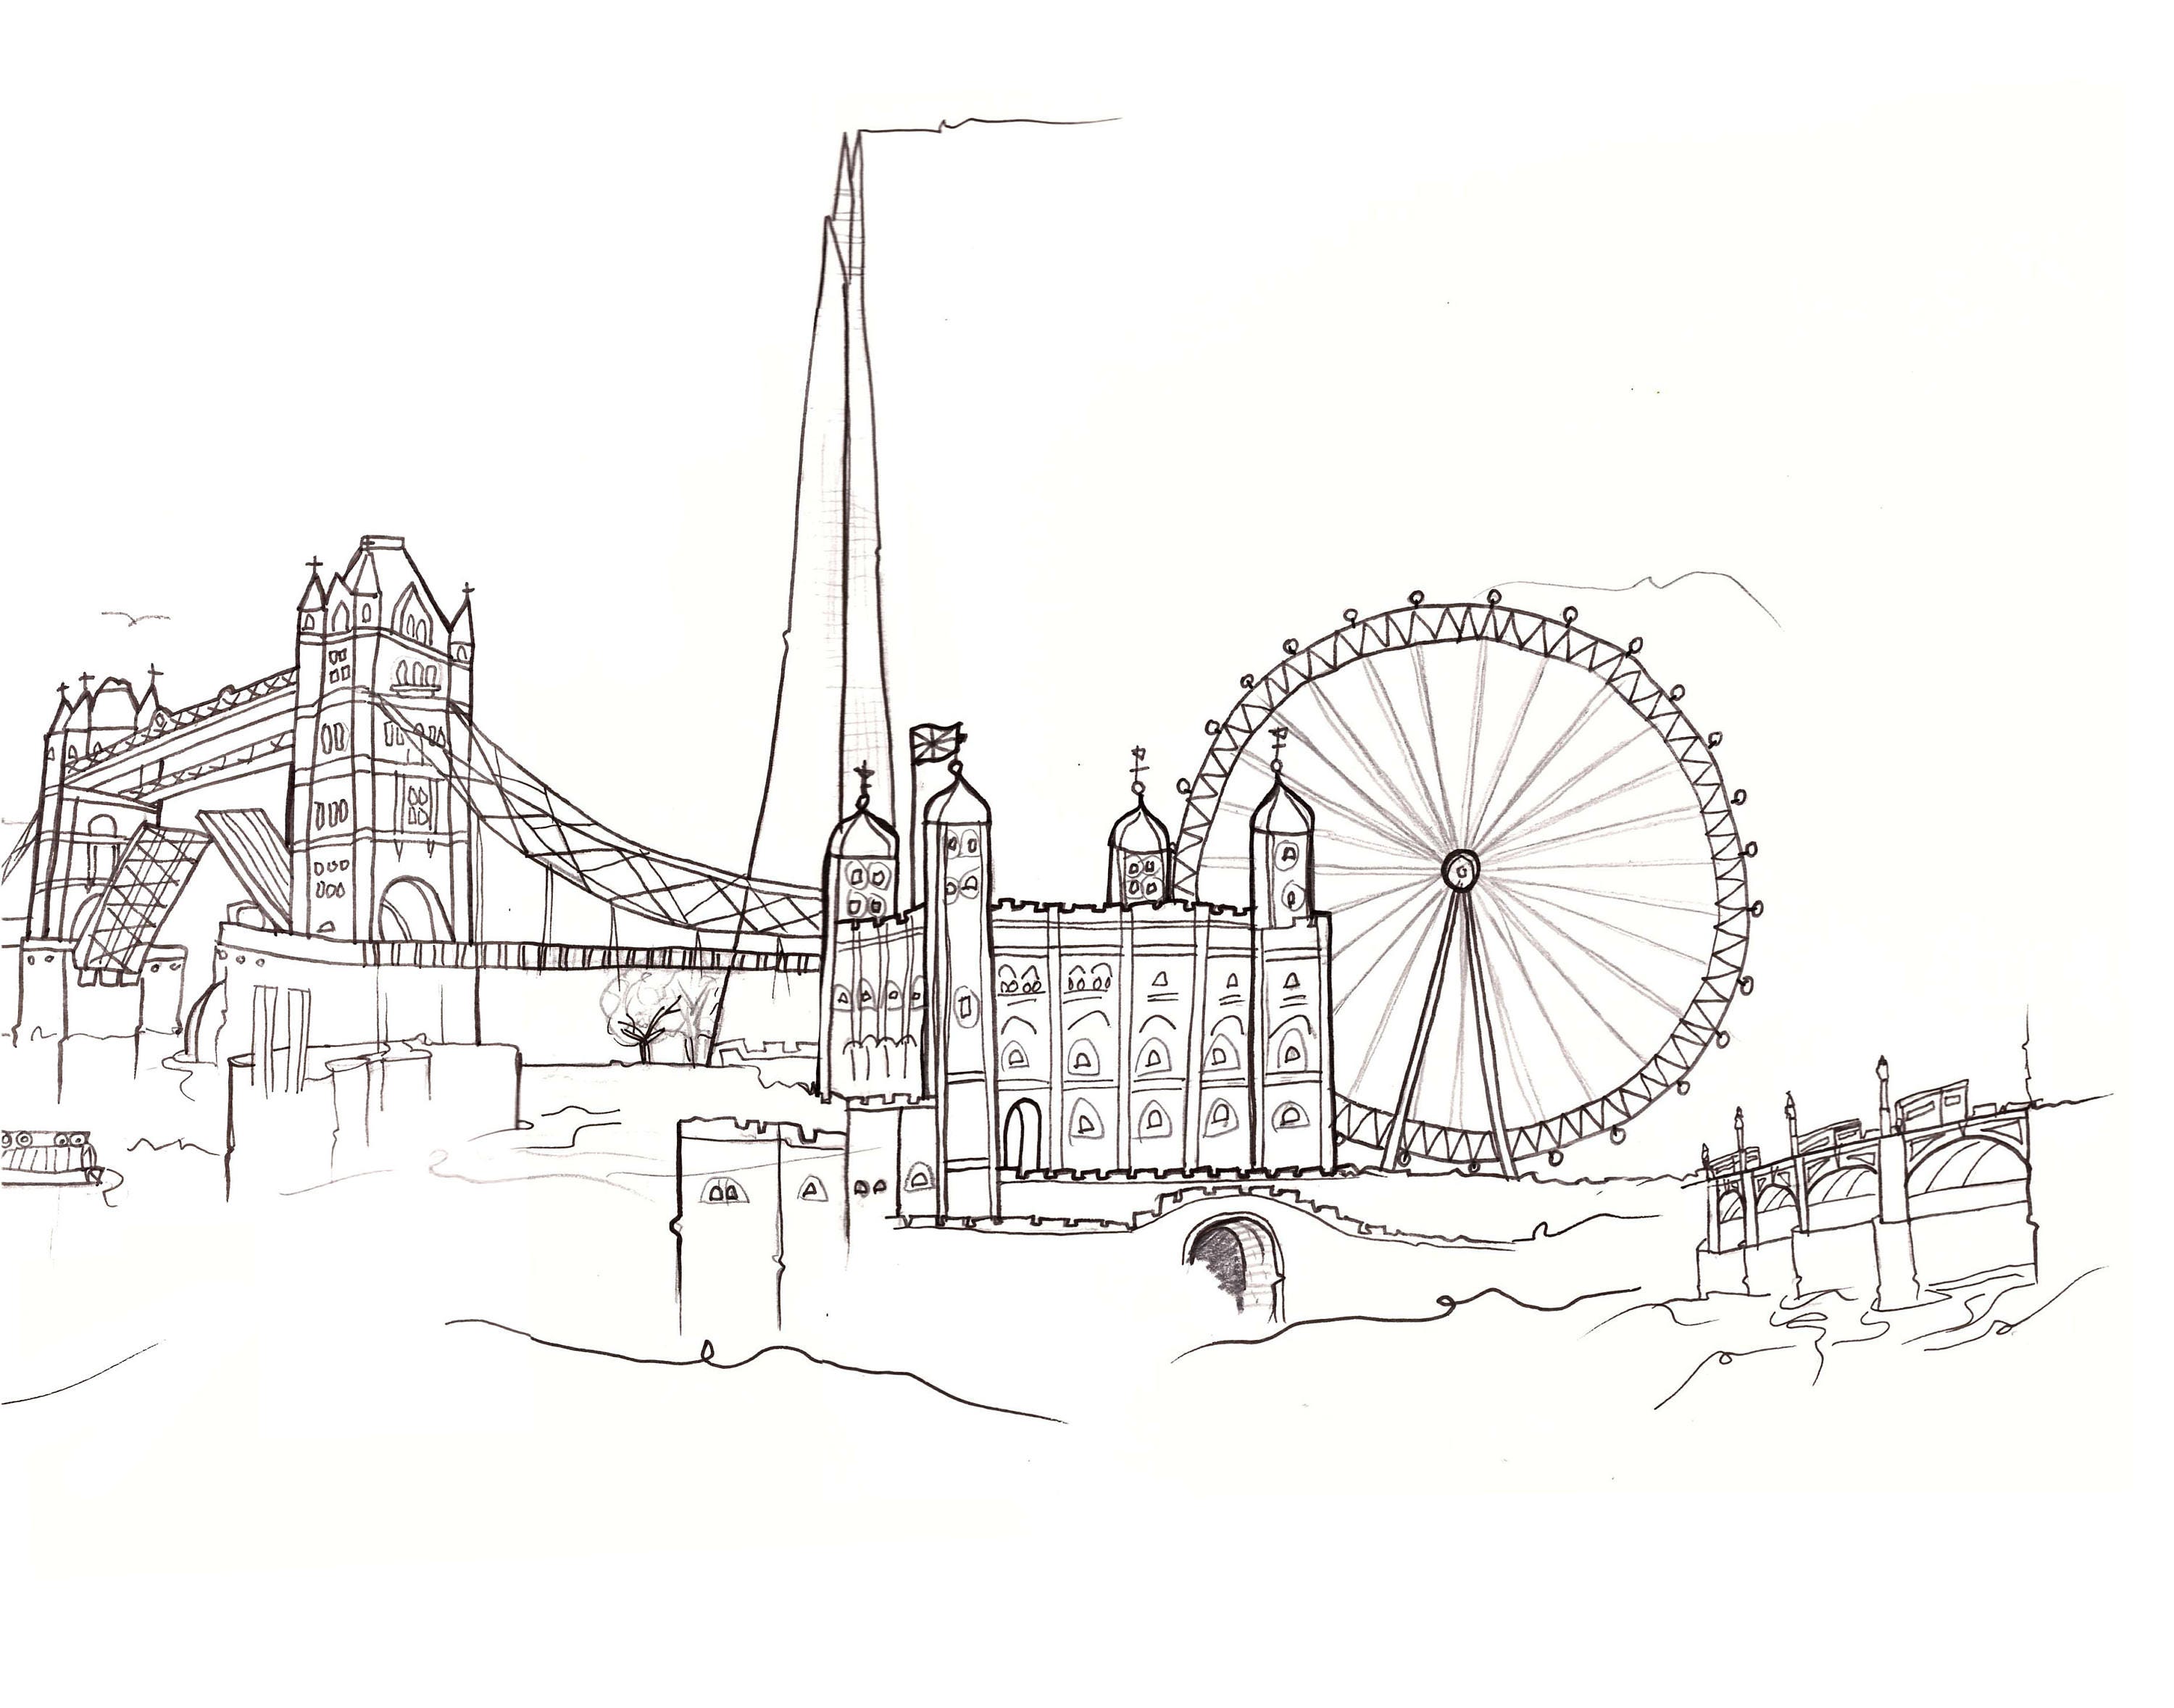 LONDON SKYLINE Beautiful Sketch Monochrome Chic City | Etsy